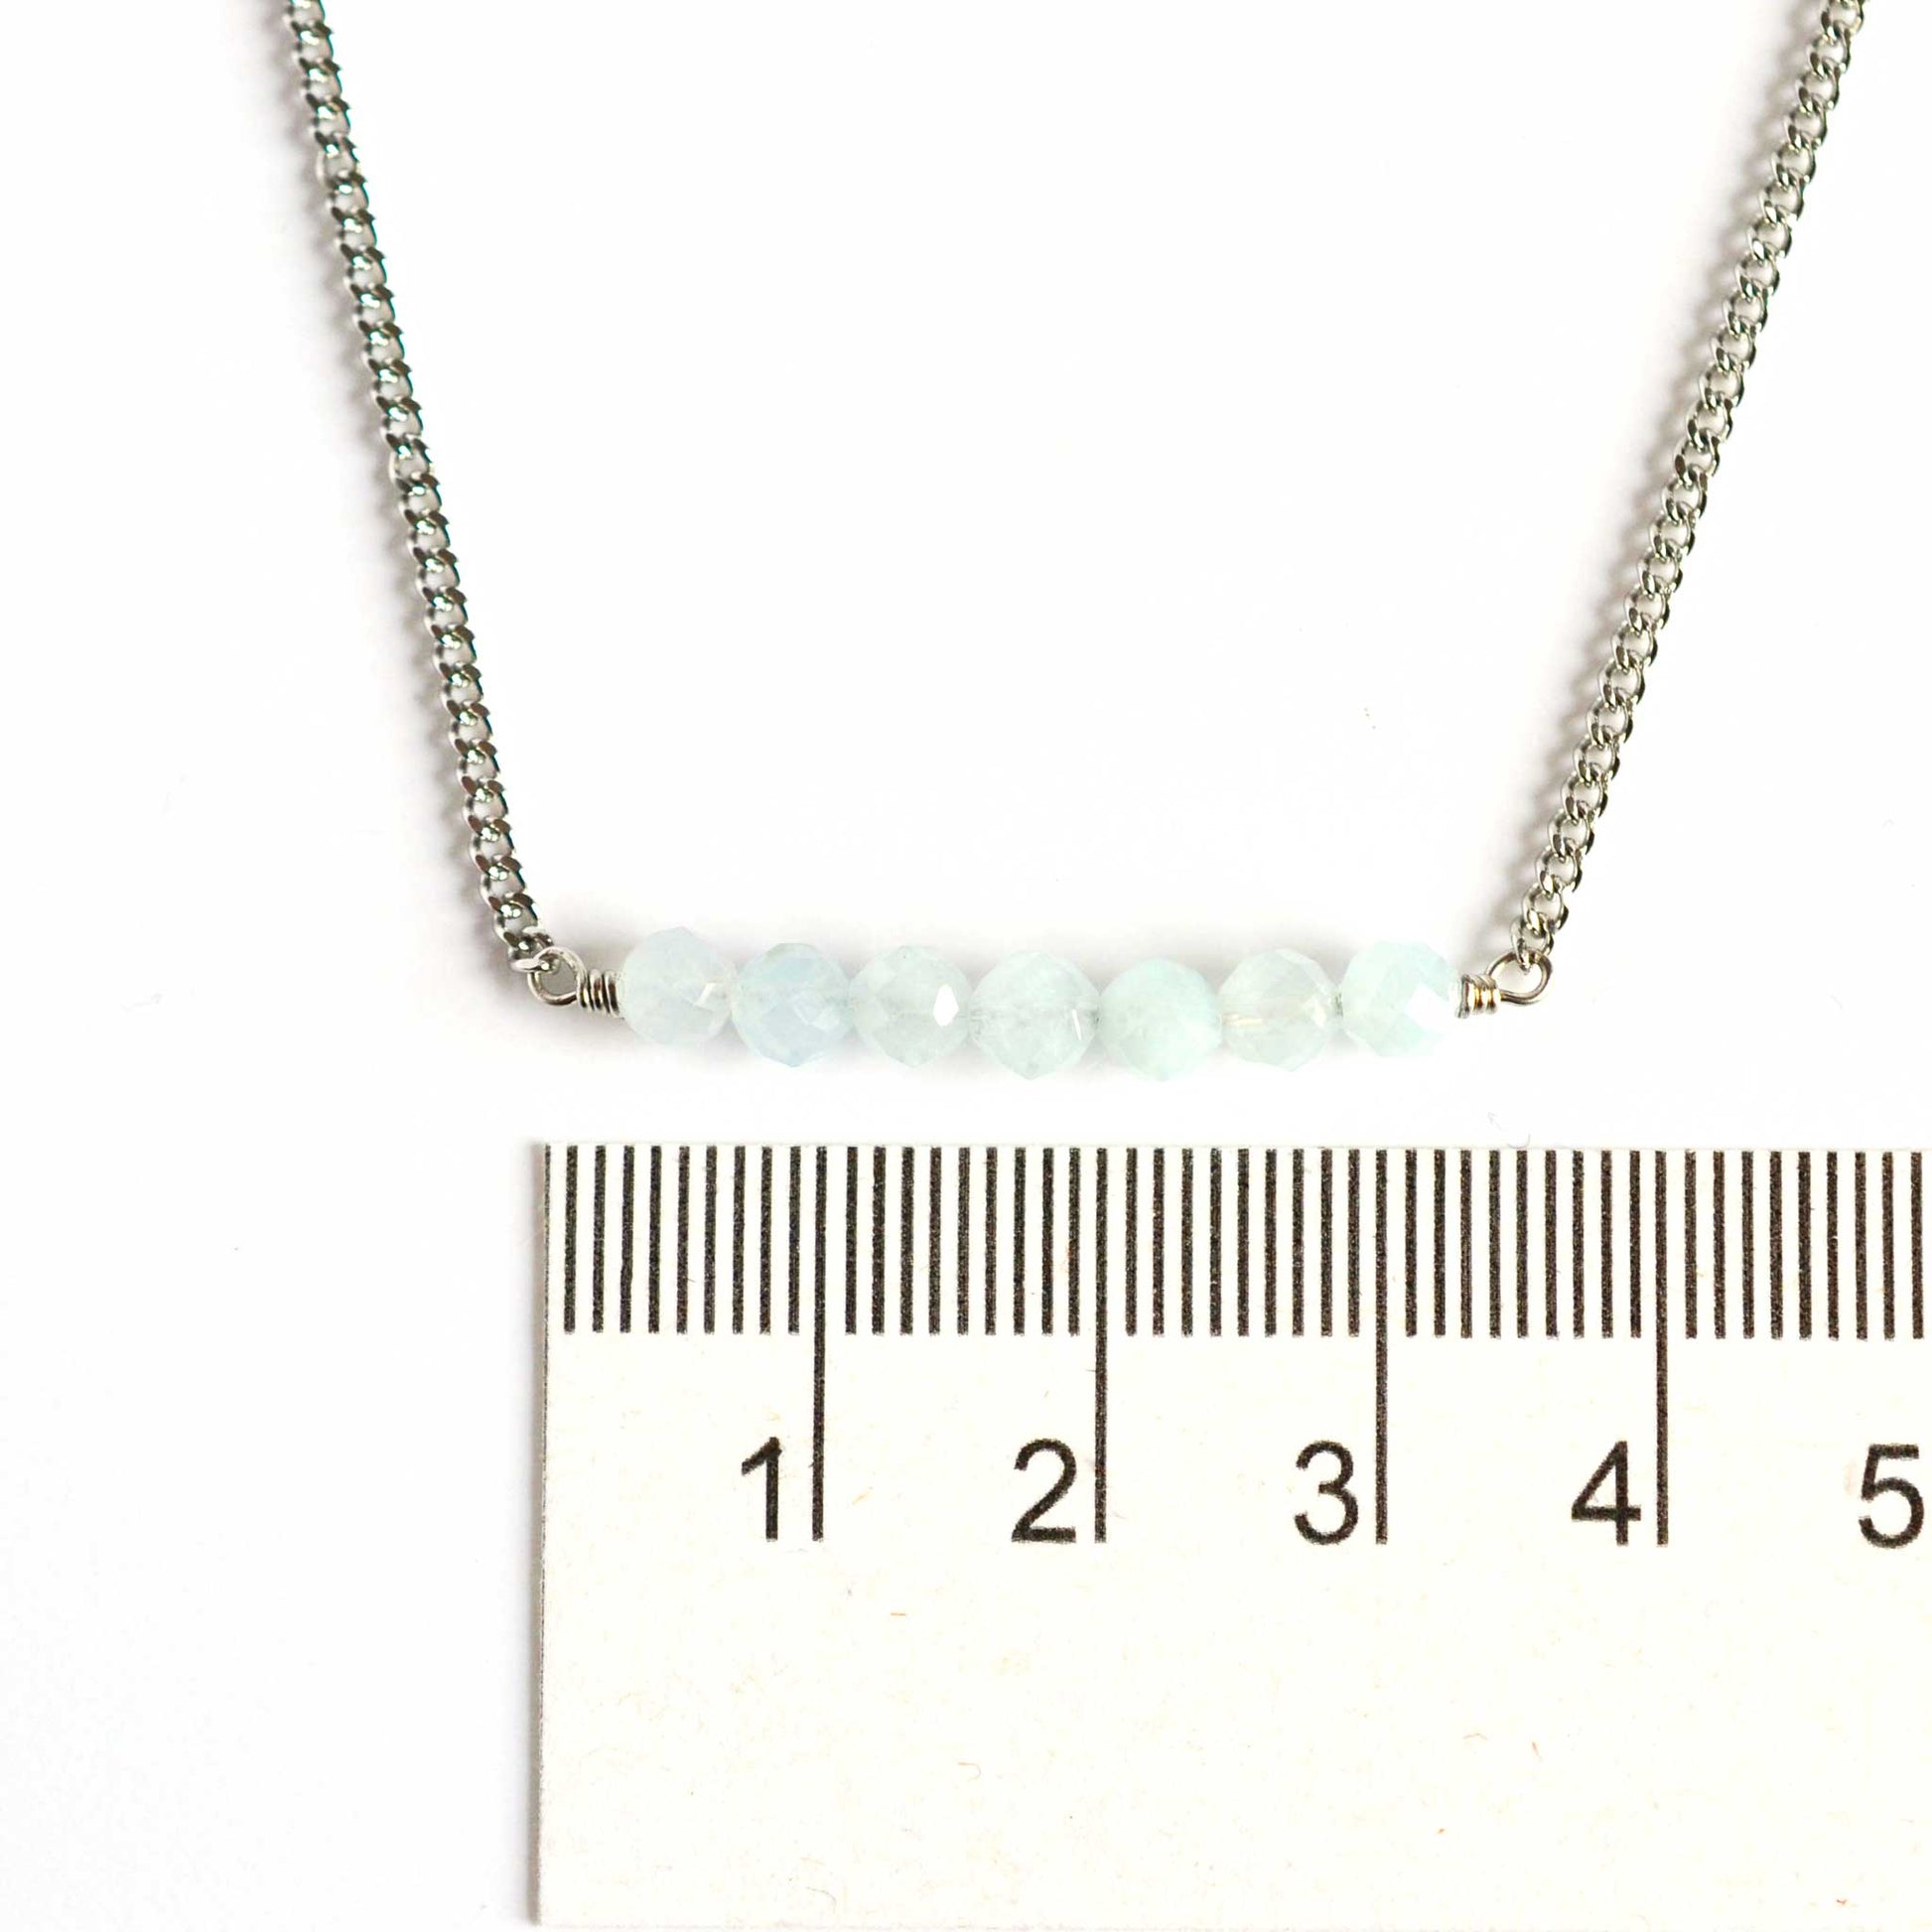 Dainty Aquamarine necklace with 4mm gemstone beads next to ruler